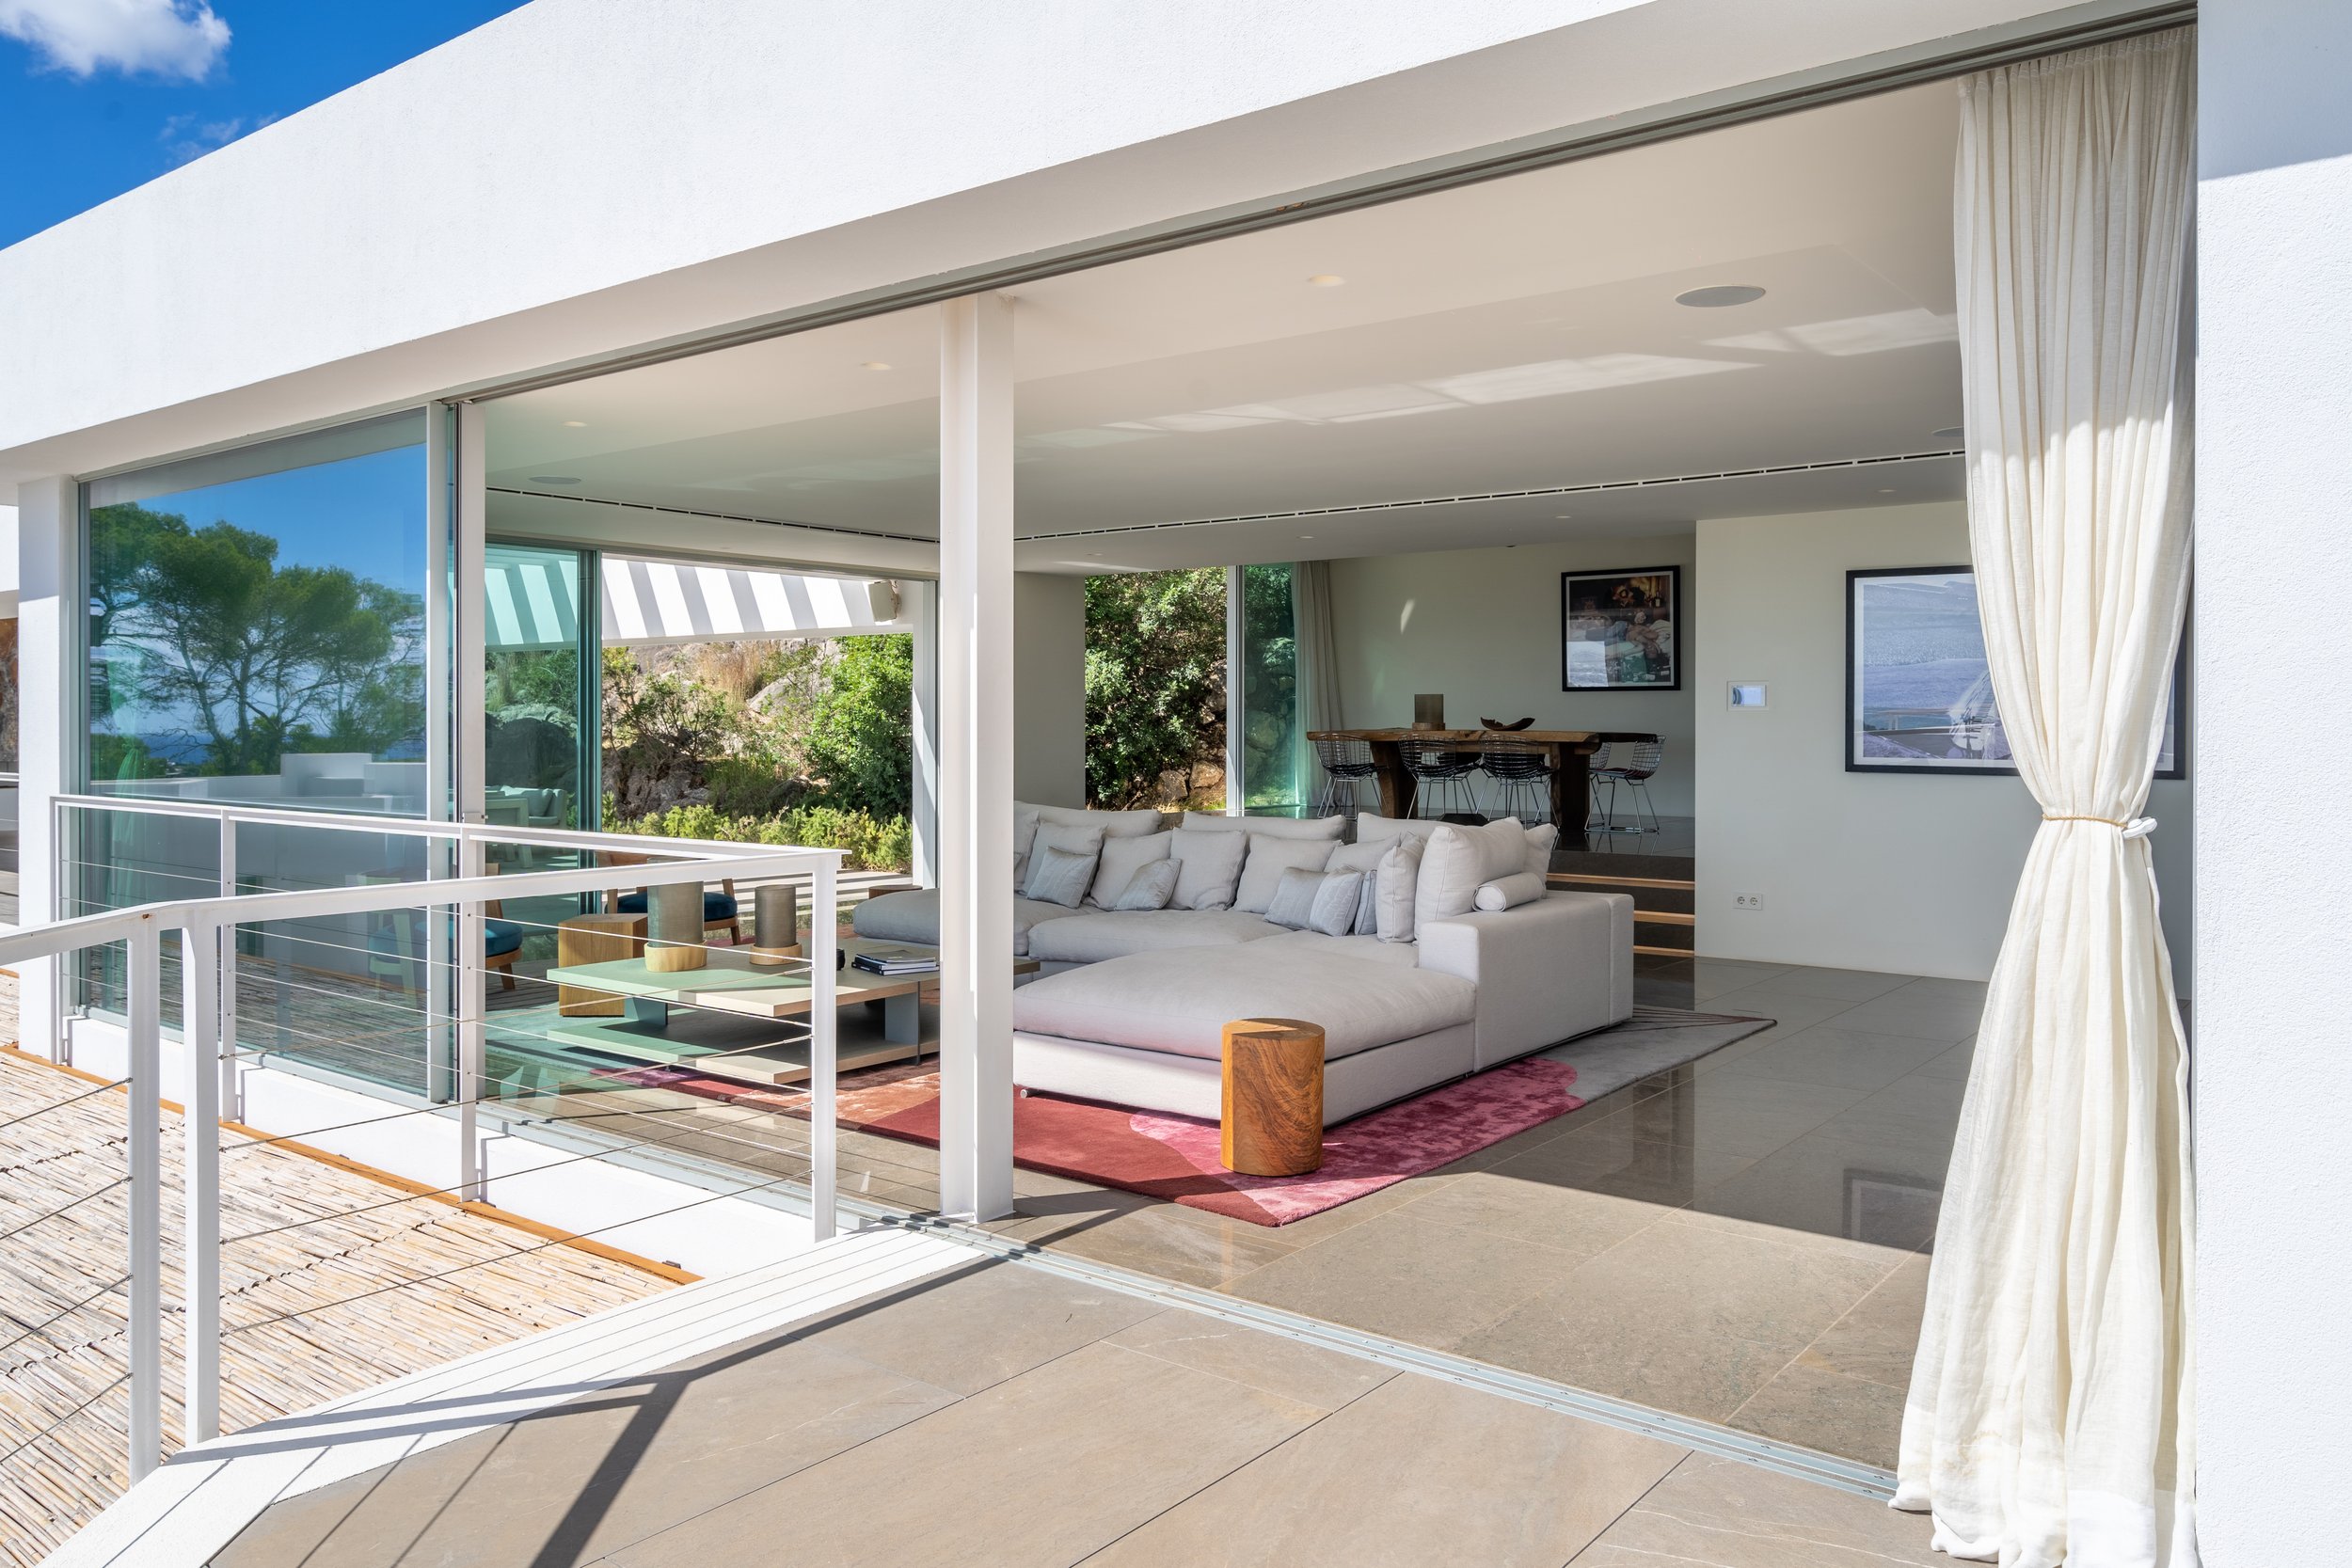 Francis York  Villa Adastra: Modern Mansion With Panoramic Island Views in Ibiza 20.jpg